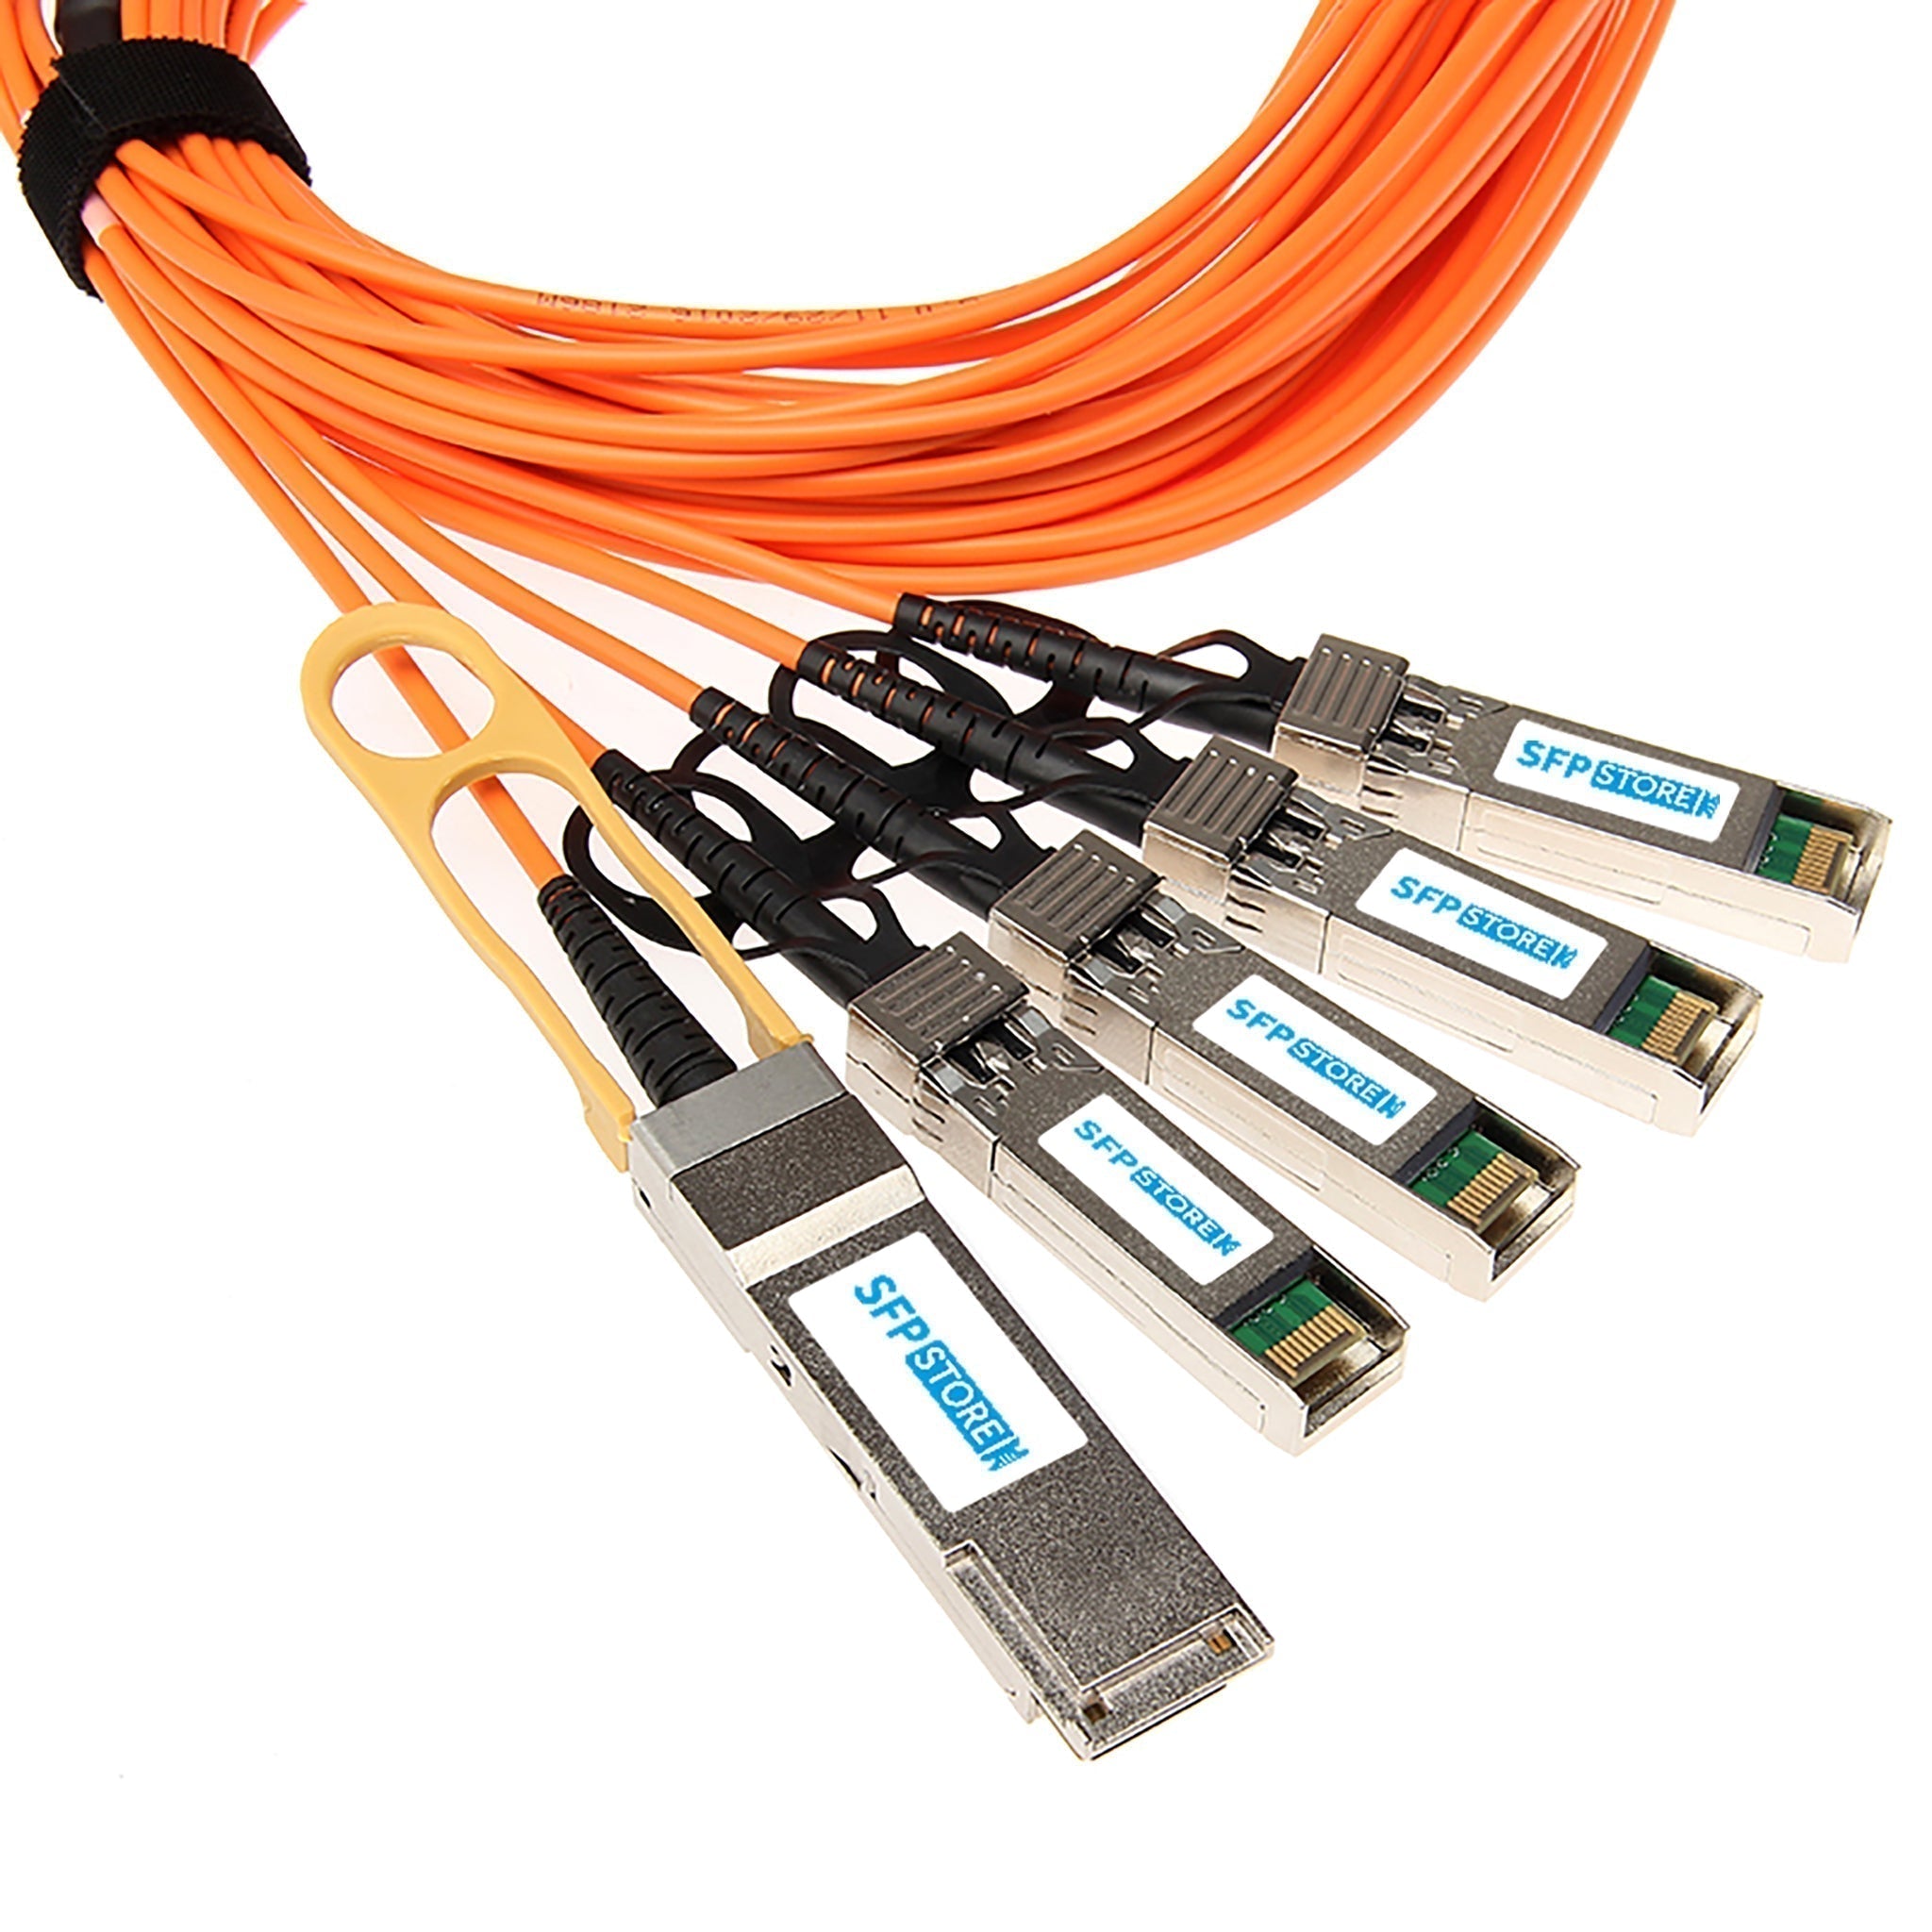 QSFP-4SFP25G-AOC5M-C - 5m Cisco Compatible 100G QSFP28 to 4 x 25G SFP28 Active Optical Cable